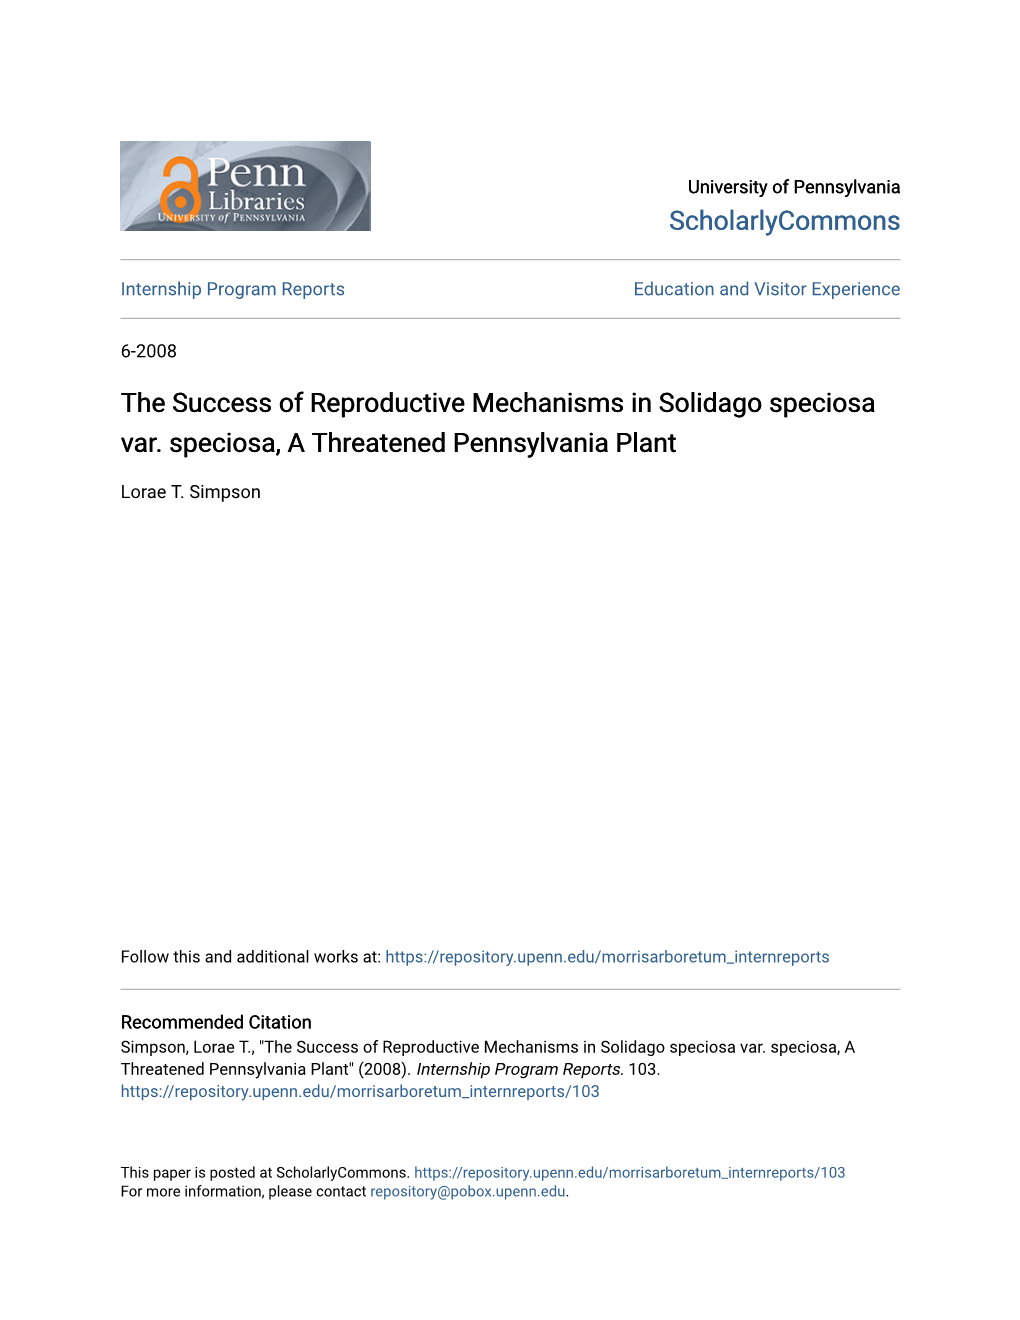 The Success of Reproductive Mechanisms in Solidago Speciosa Var